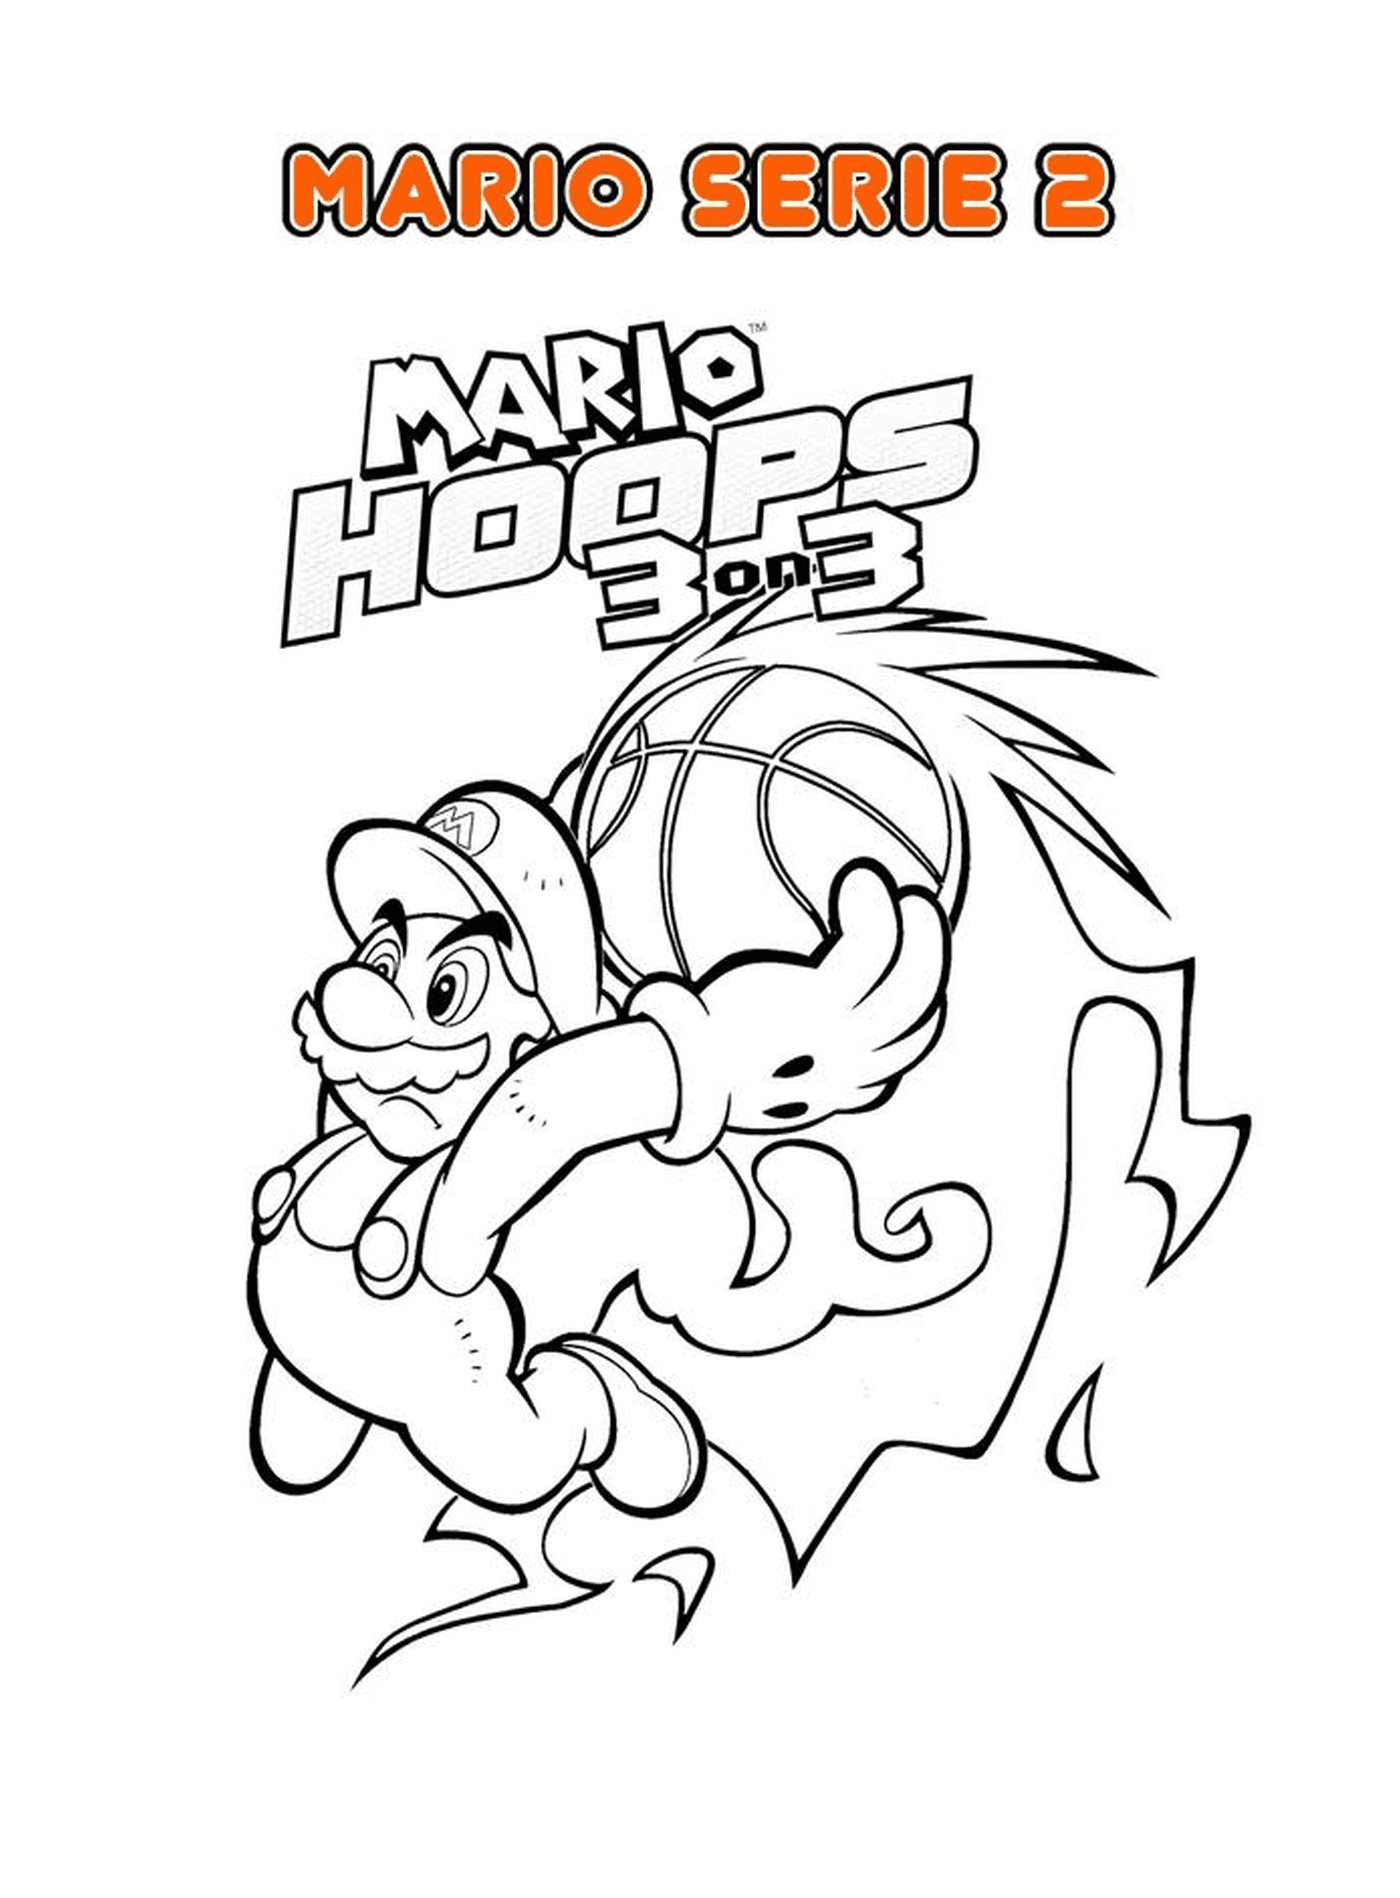  Mario Bros Nintendo 2, ein Mario-Charakter 